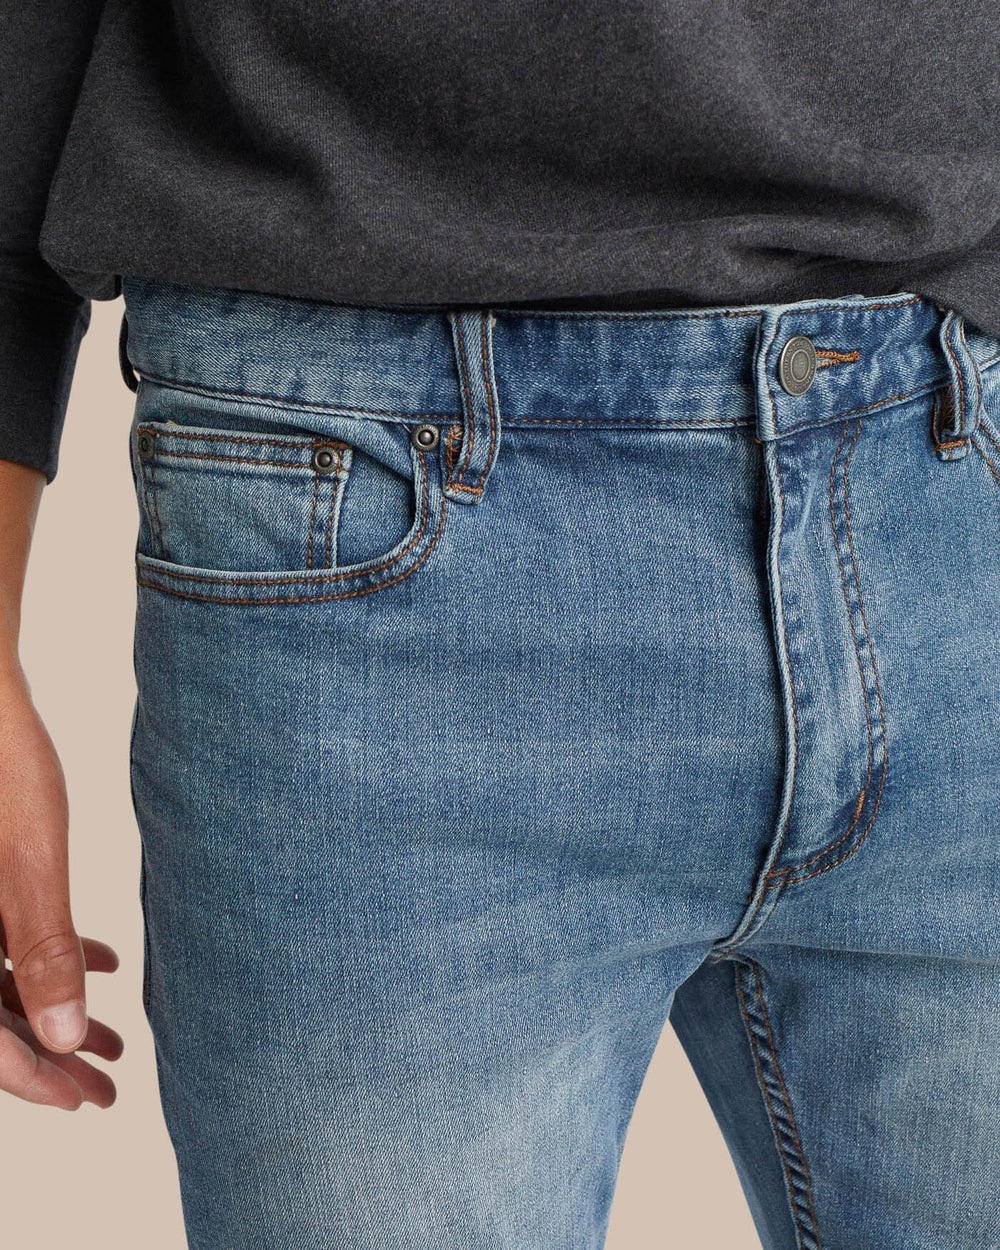 The detail of the Men's Blue Denim Charleston Denim Jeans by Southern Tide - Medium Wash